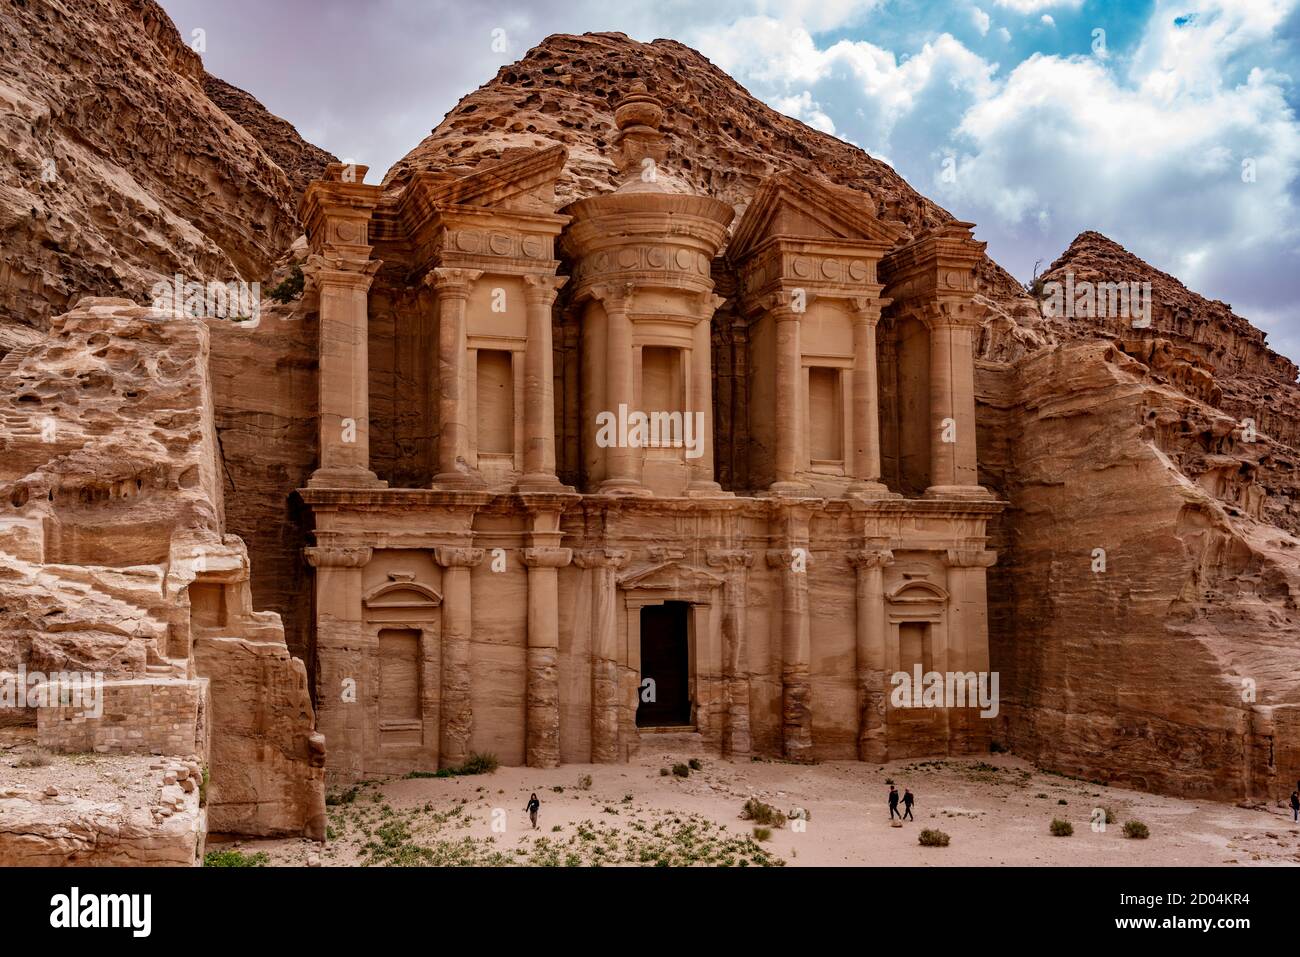 The Treasury at Petra Ruins in Jordan Stock Photo - Alamy